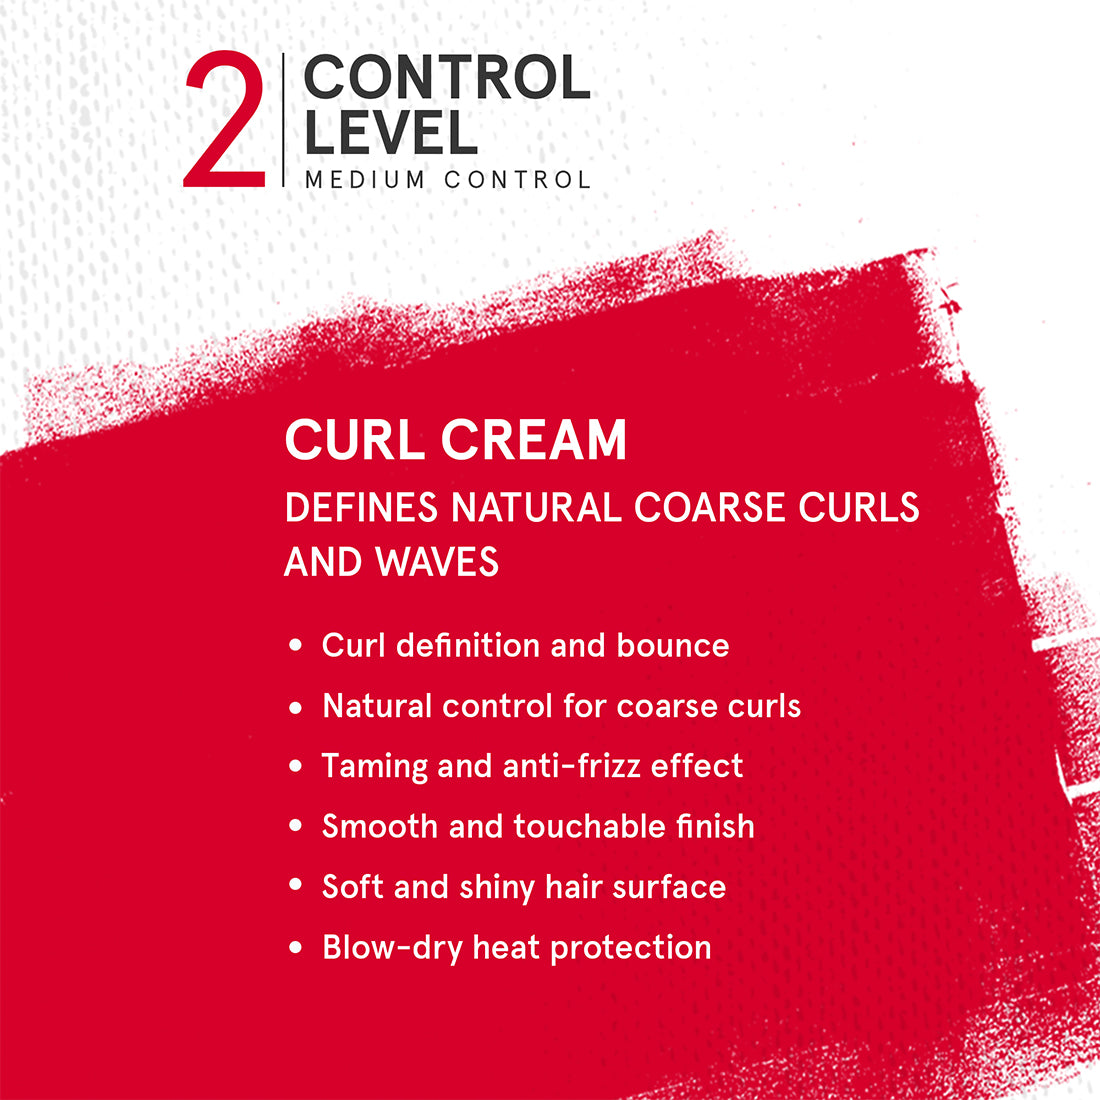 Schwarzkopf Professional Osis+ Curl Honey Curl Cream 150ml